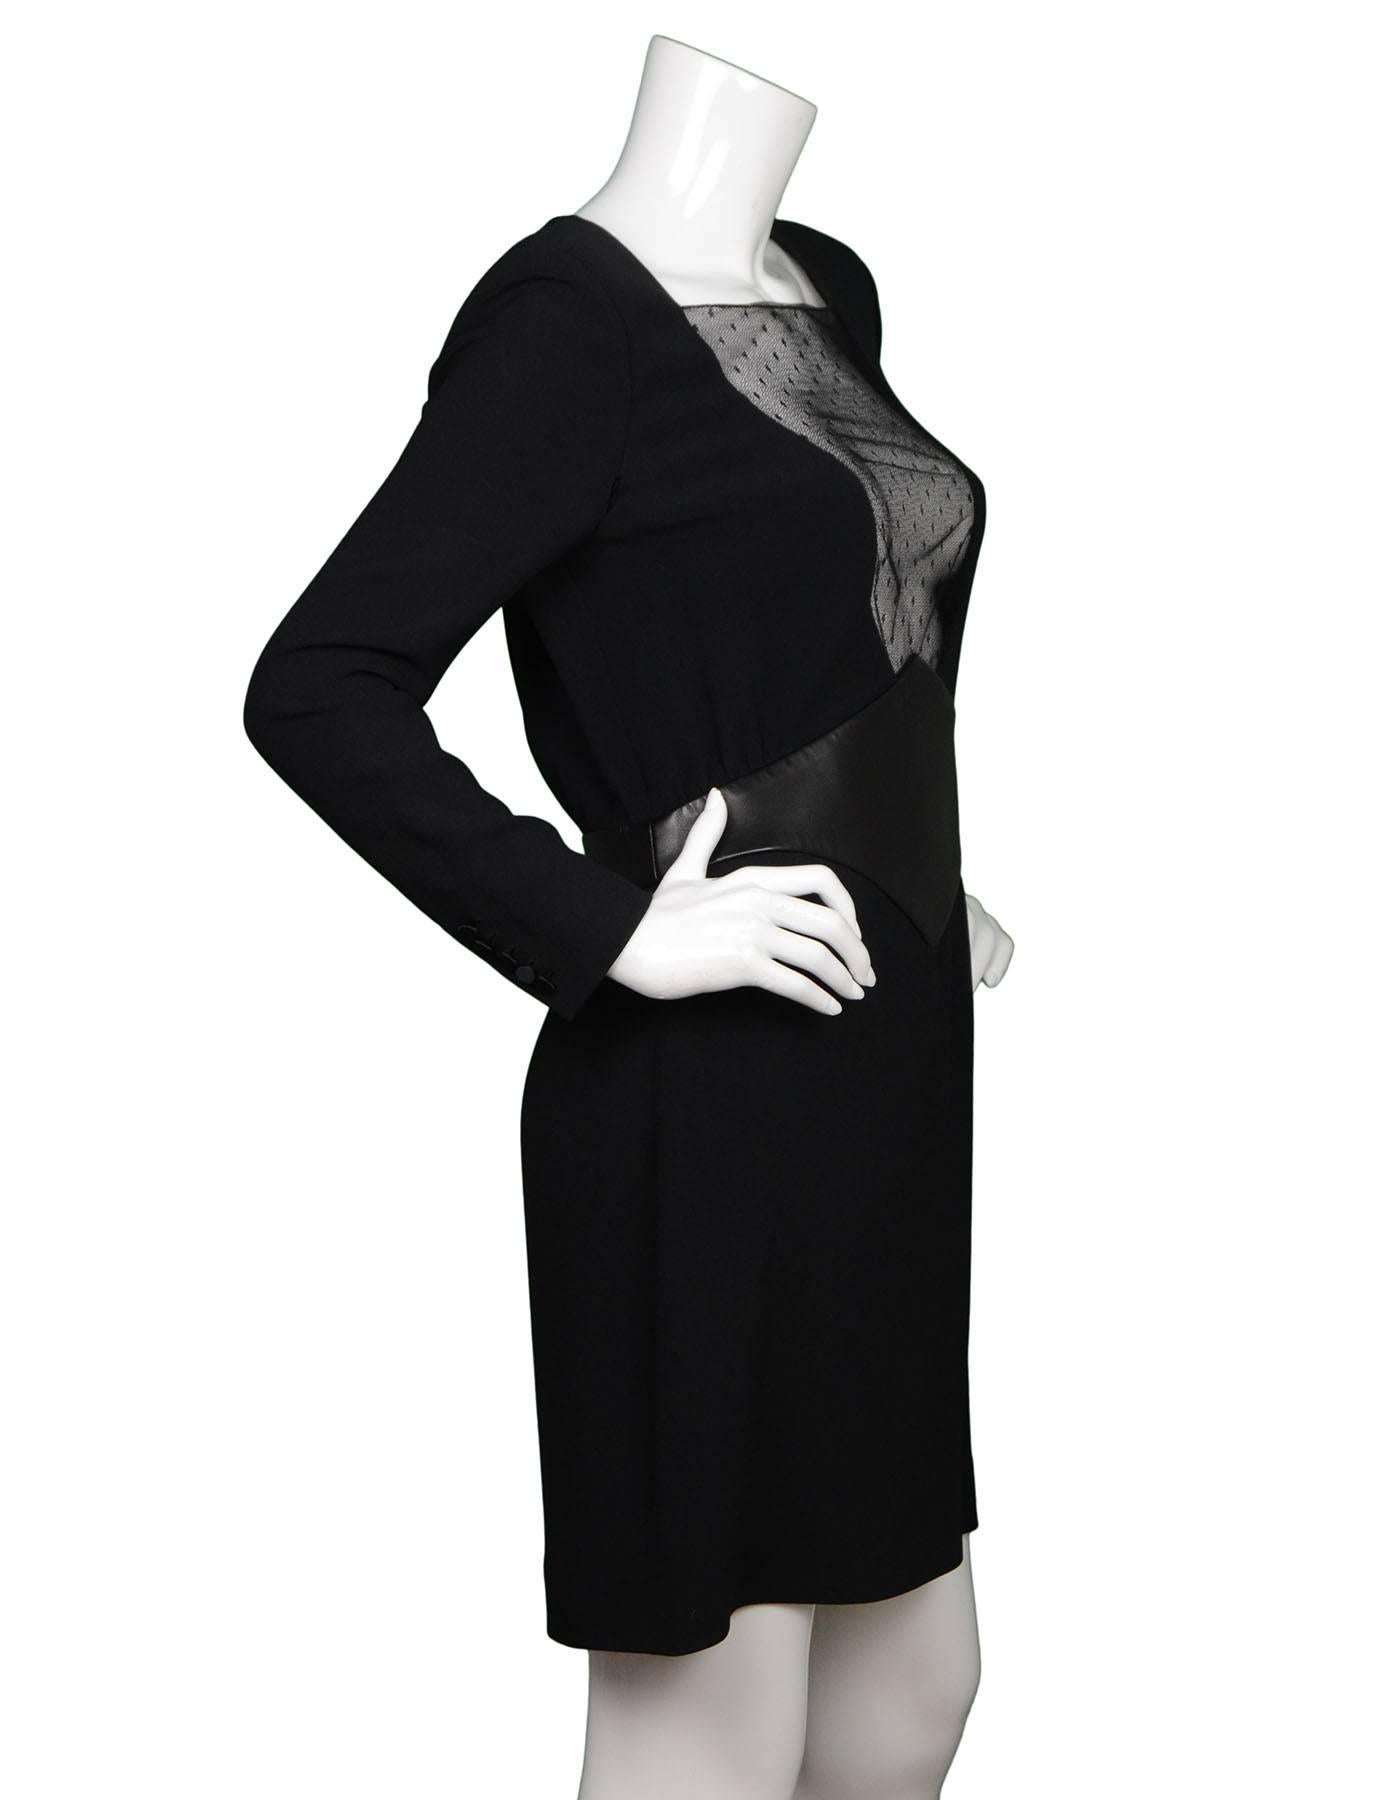 Saint Laurent NWT Long Sleeve Deep V Dress 
Features black sheer polka dot lace at neckline

Made In: France
Color: Black
Composition: 57% acetate, 43% viscose
Lining: Black, 100% polyamide
Closure/Opening: Side zipper
Exterior Pockets: